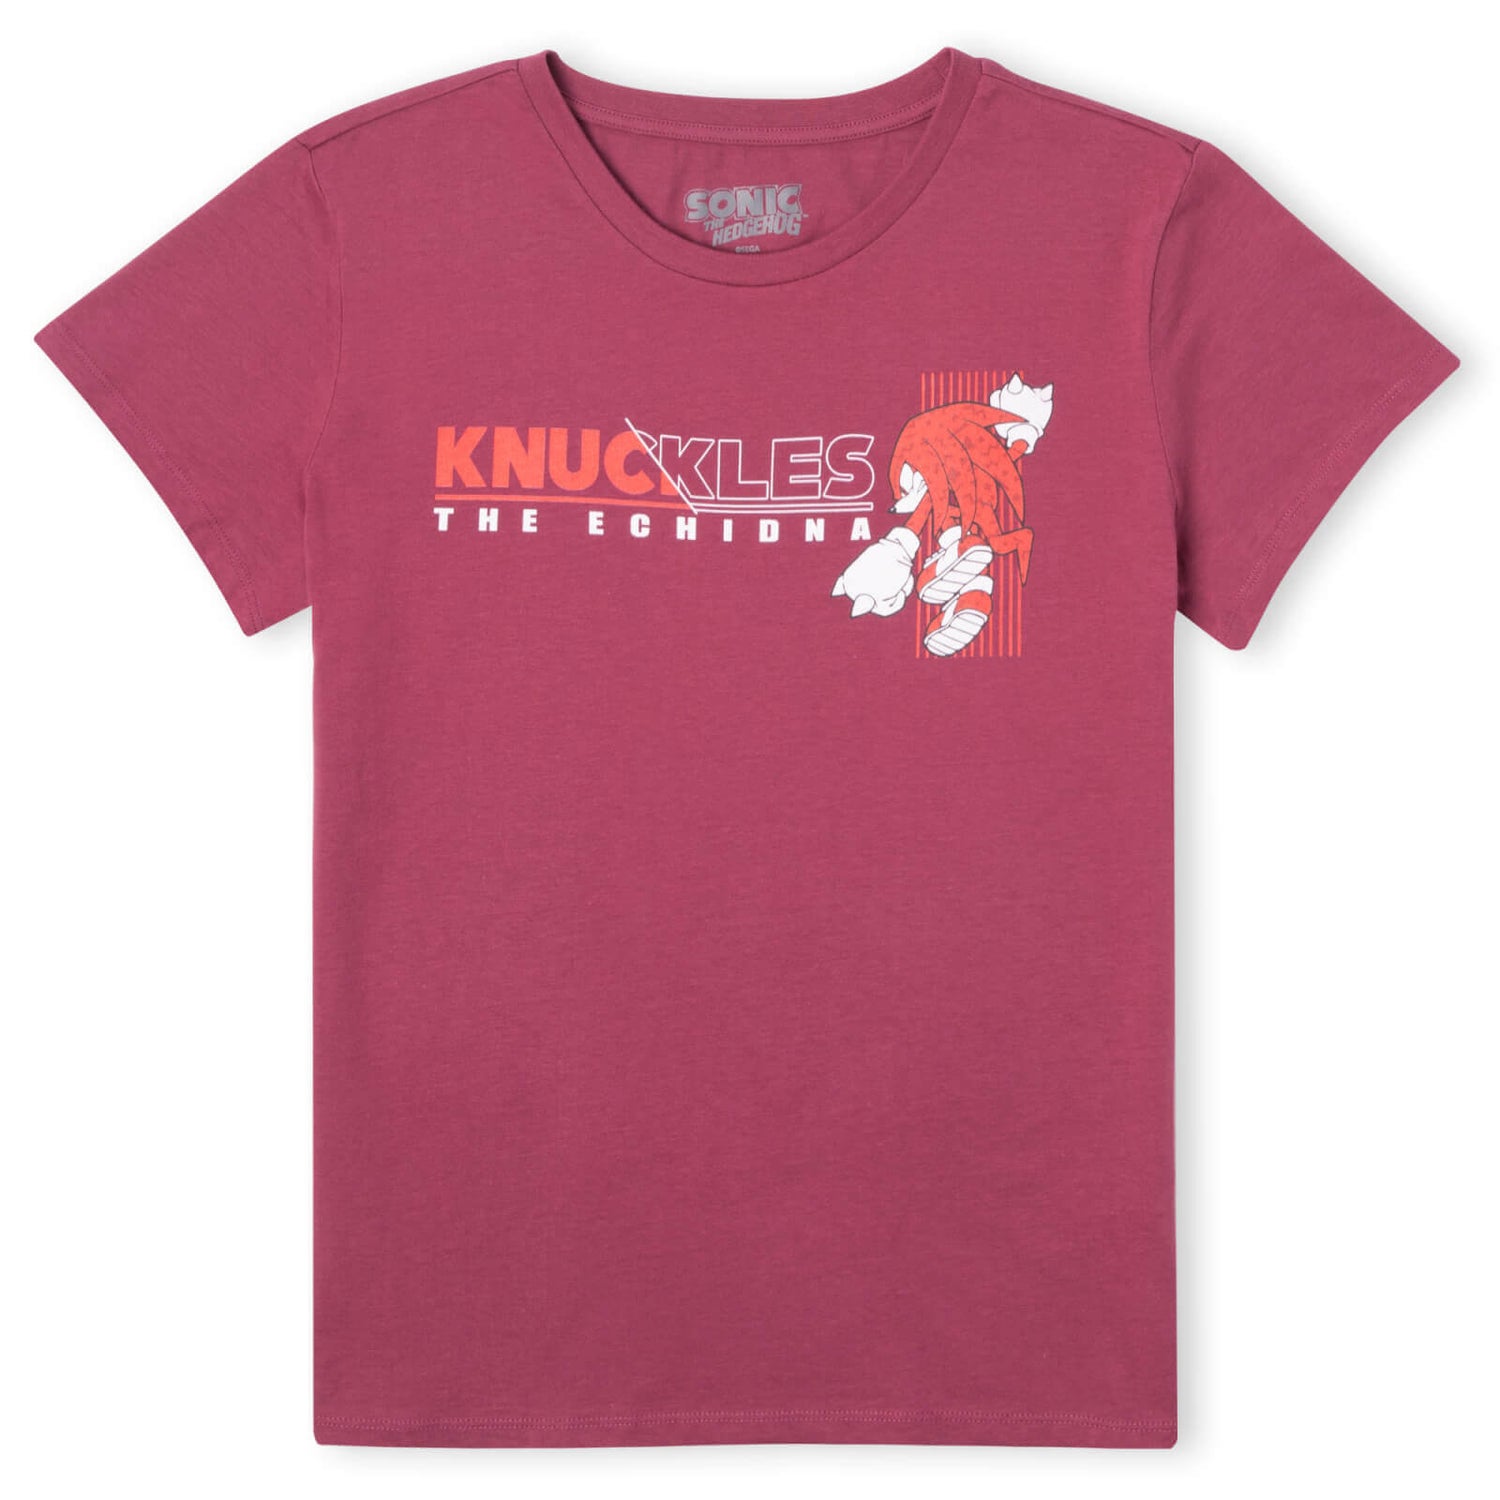 Camiseta para mujer The Echidna de Sonic The Hedgehog Knuckles - Burdeos